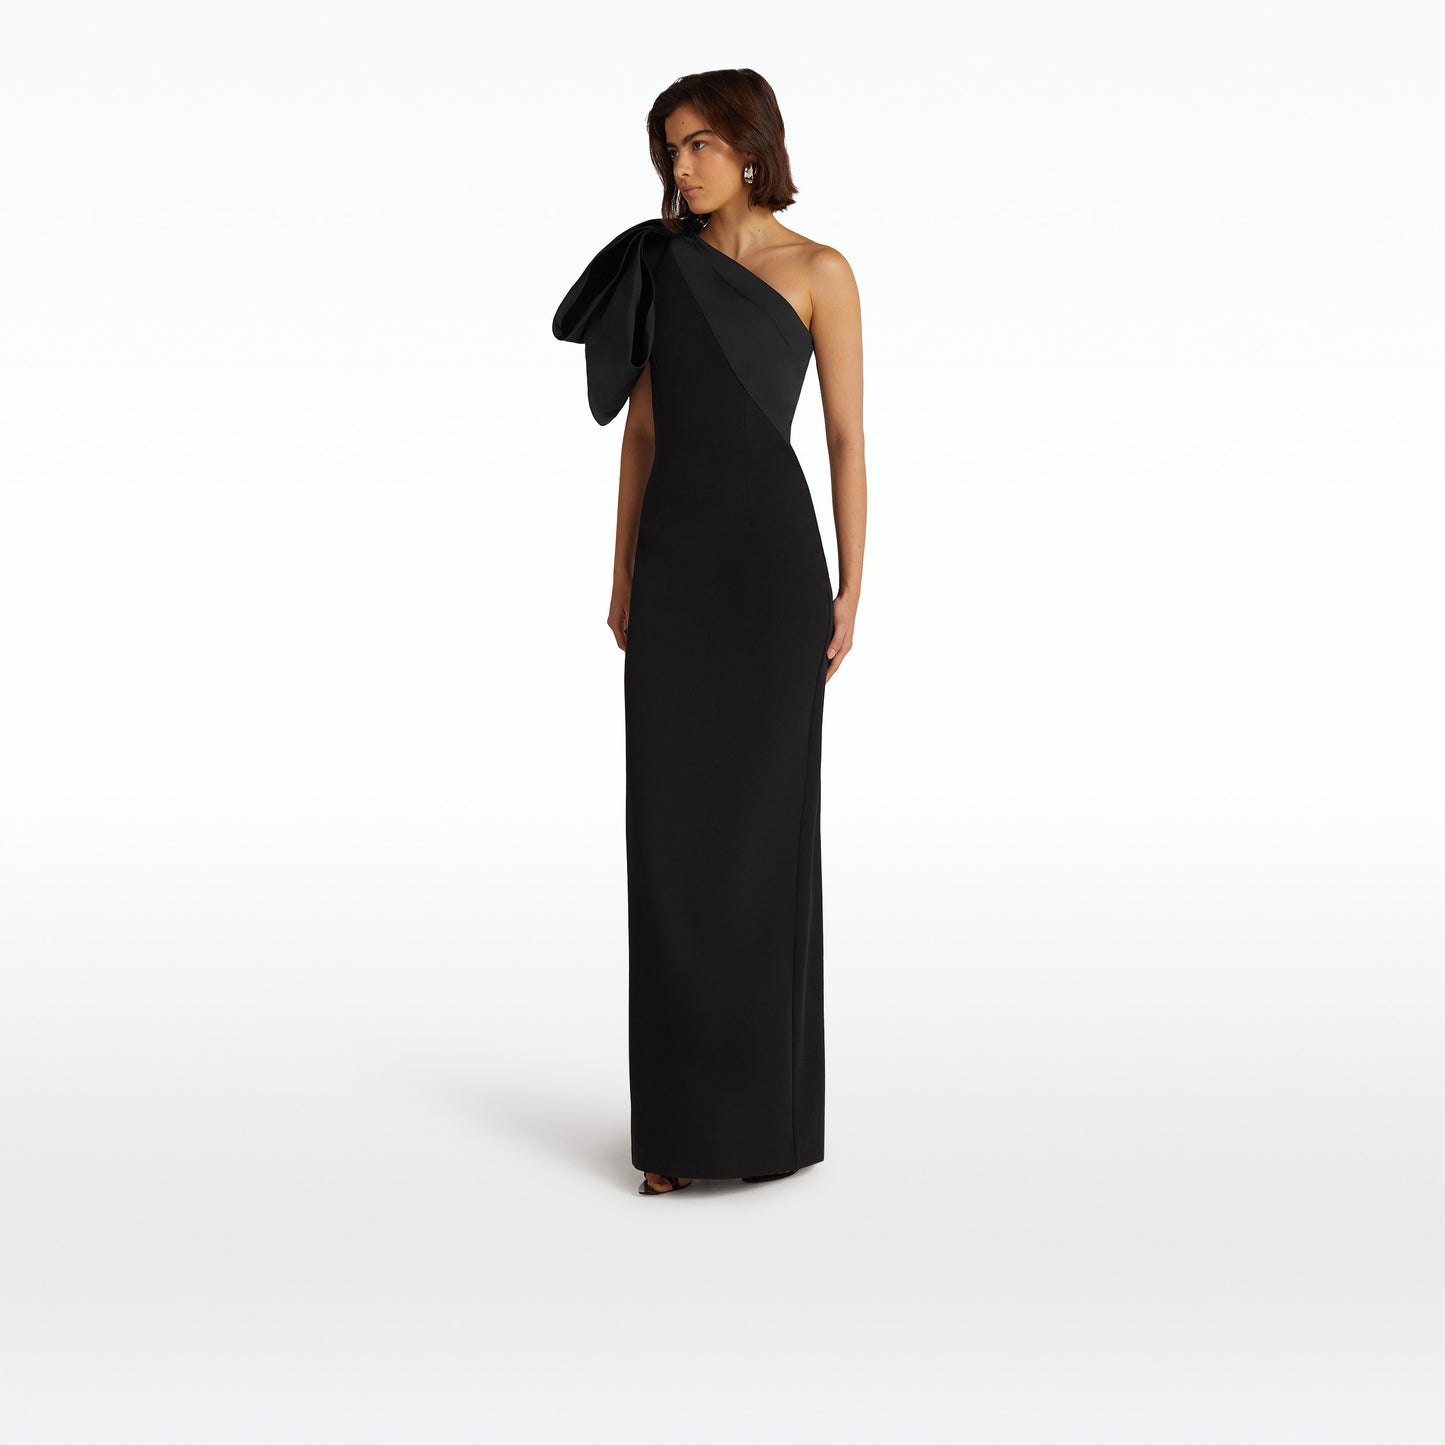 Maelys Black Long Dress